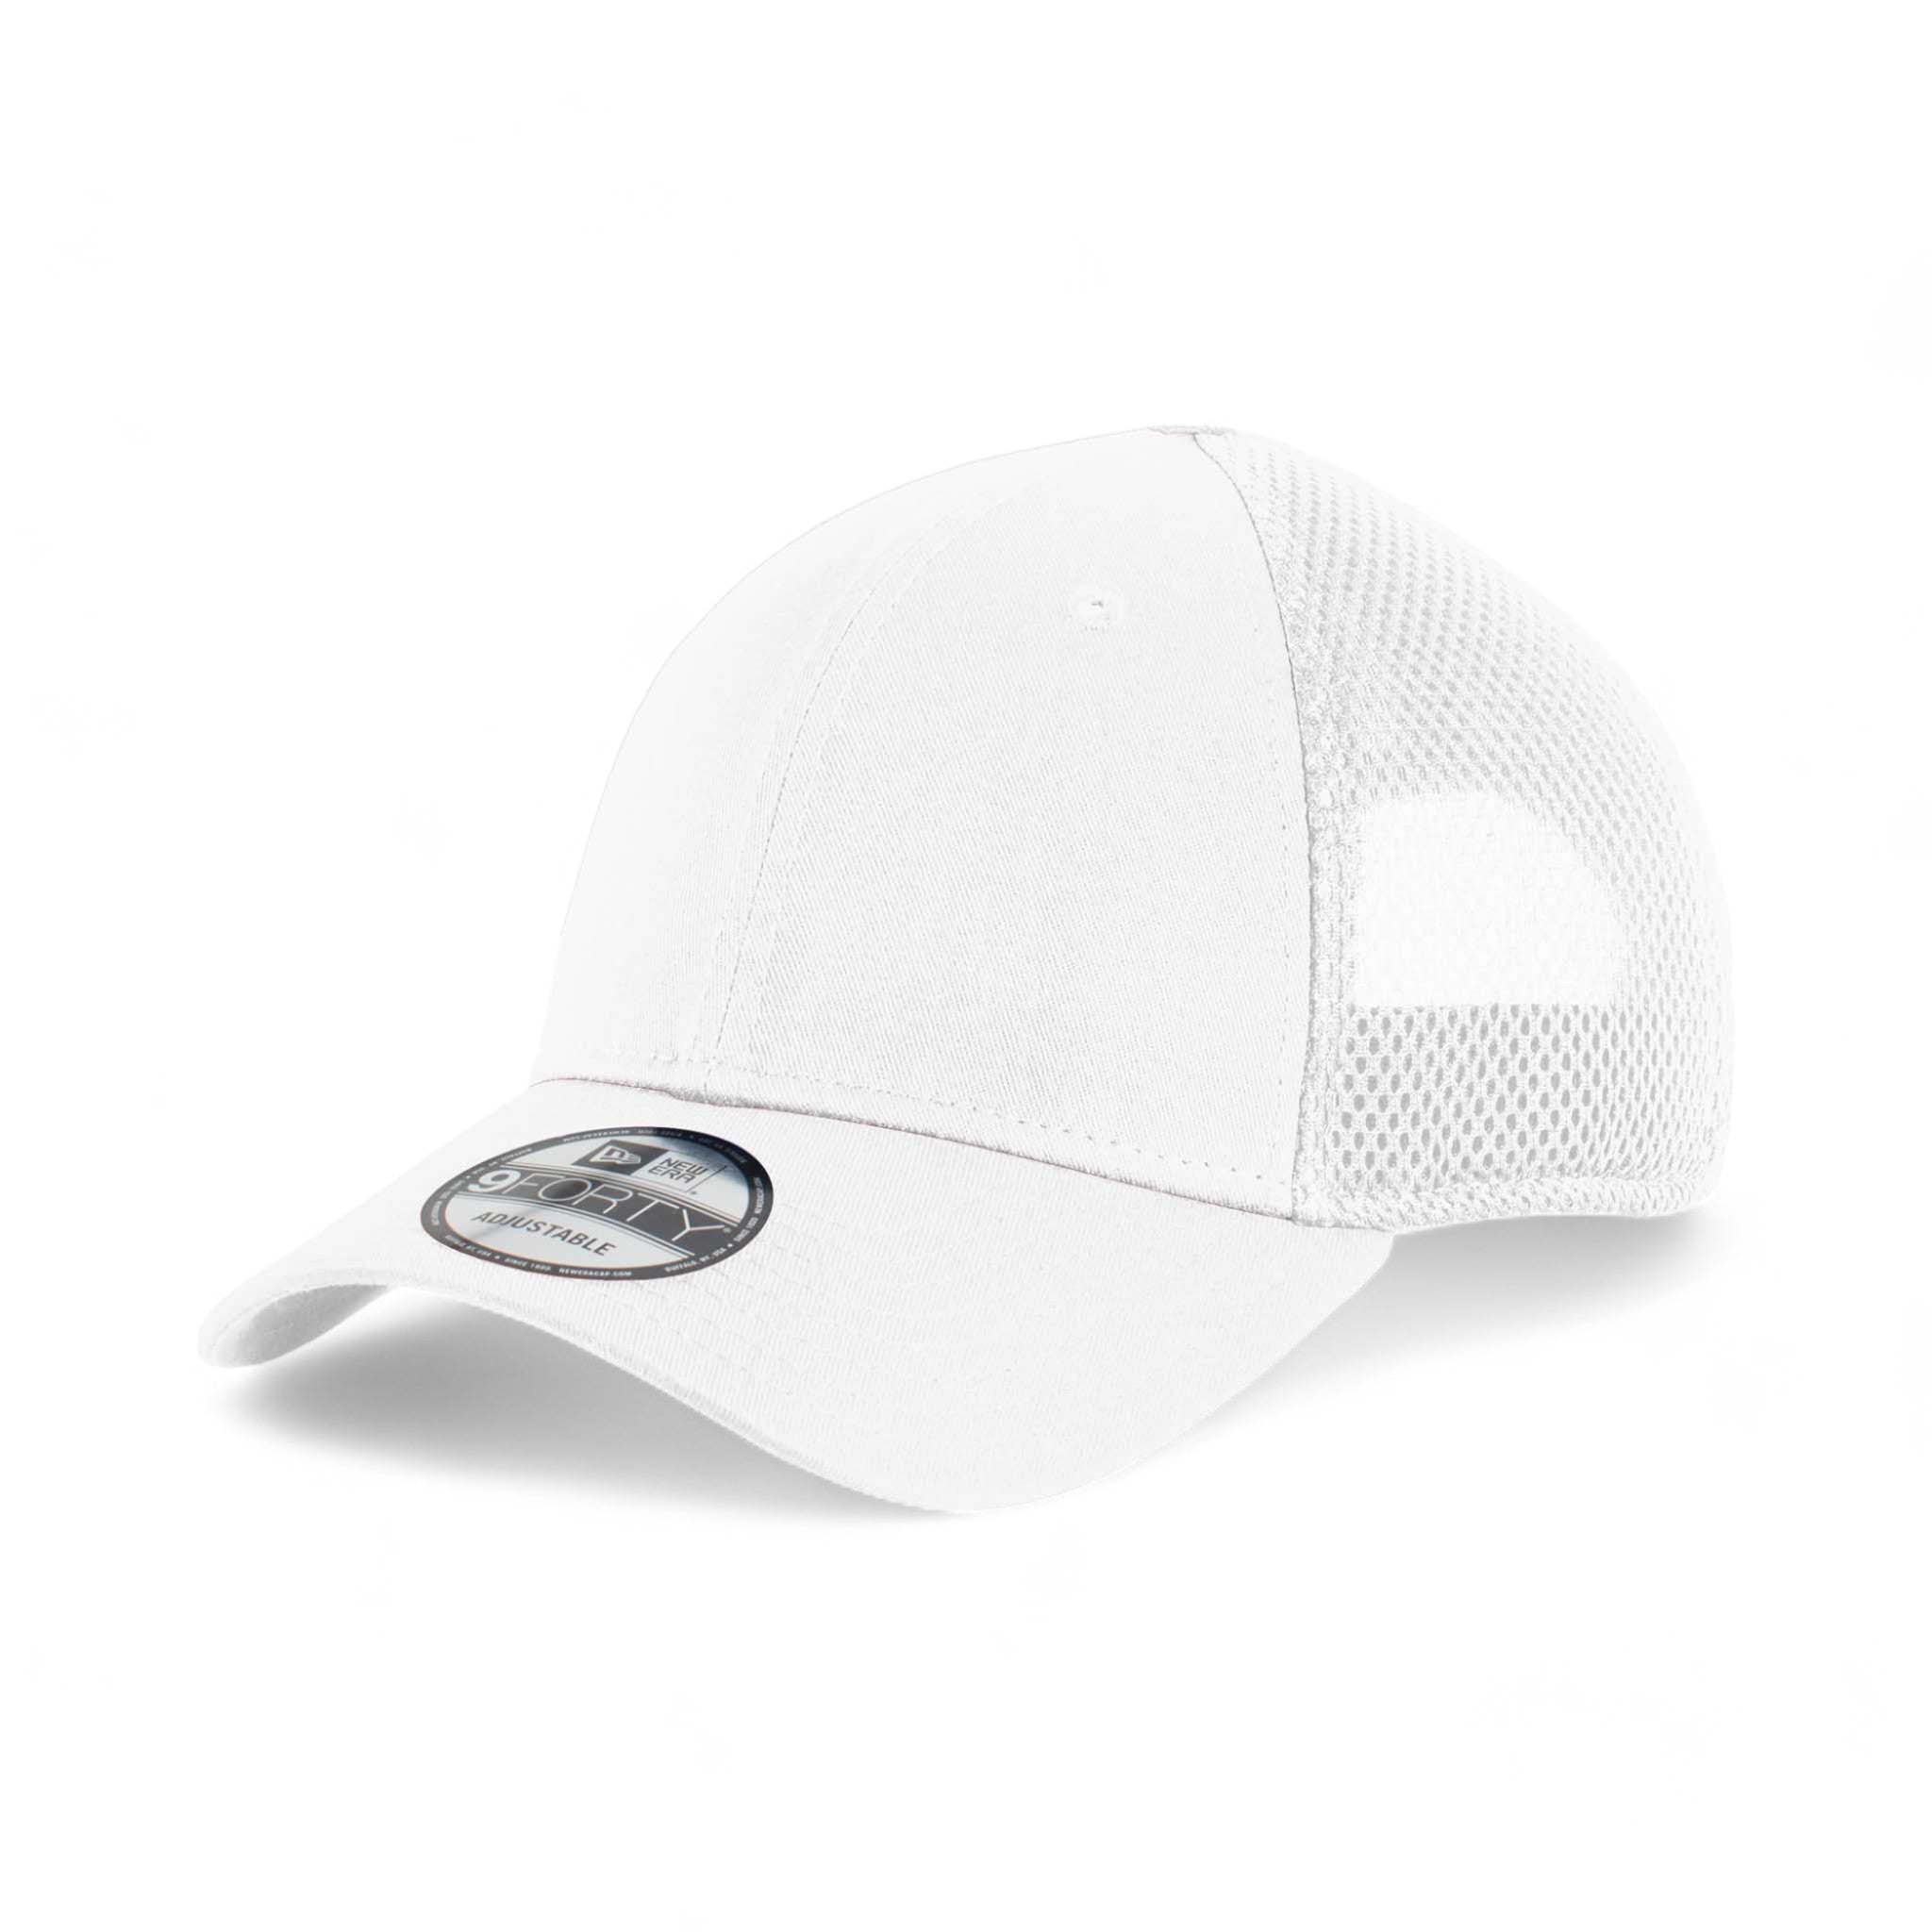 Side view of New Era NE204 custom hat in white and white